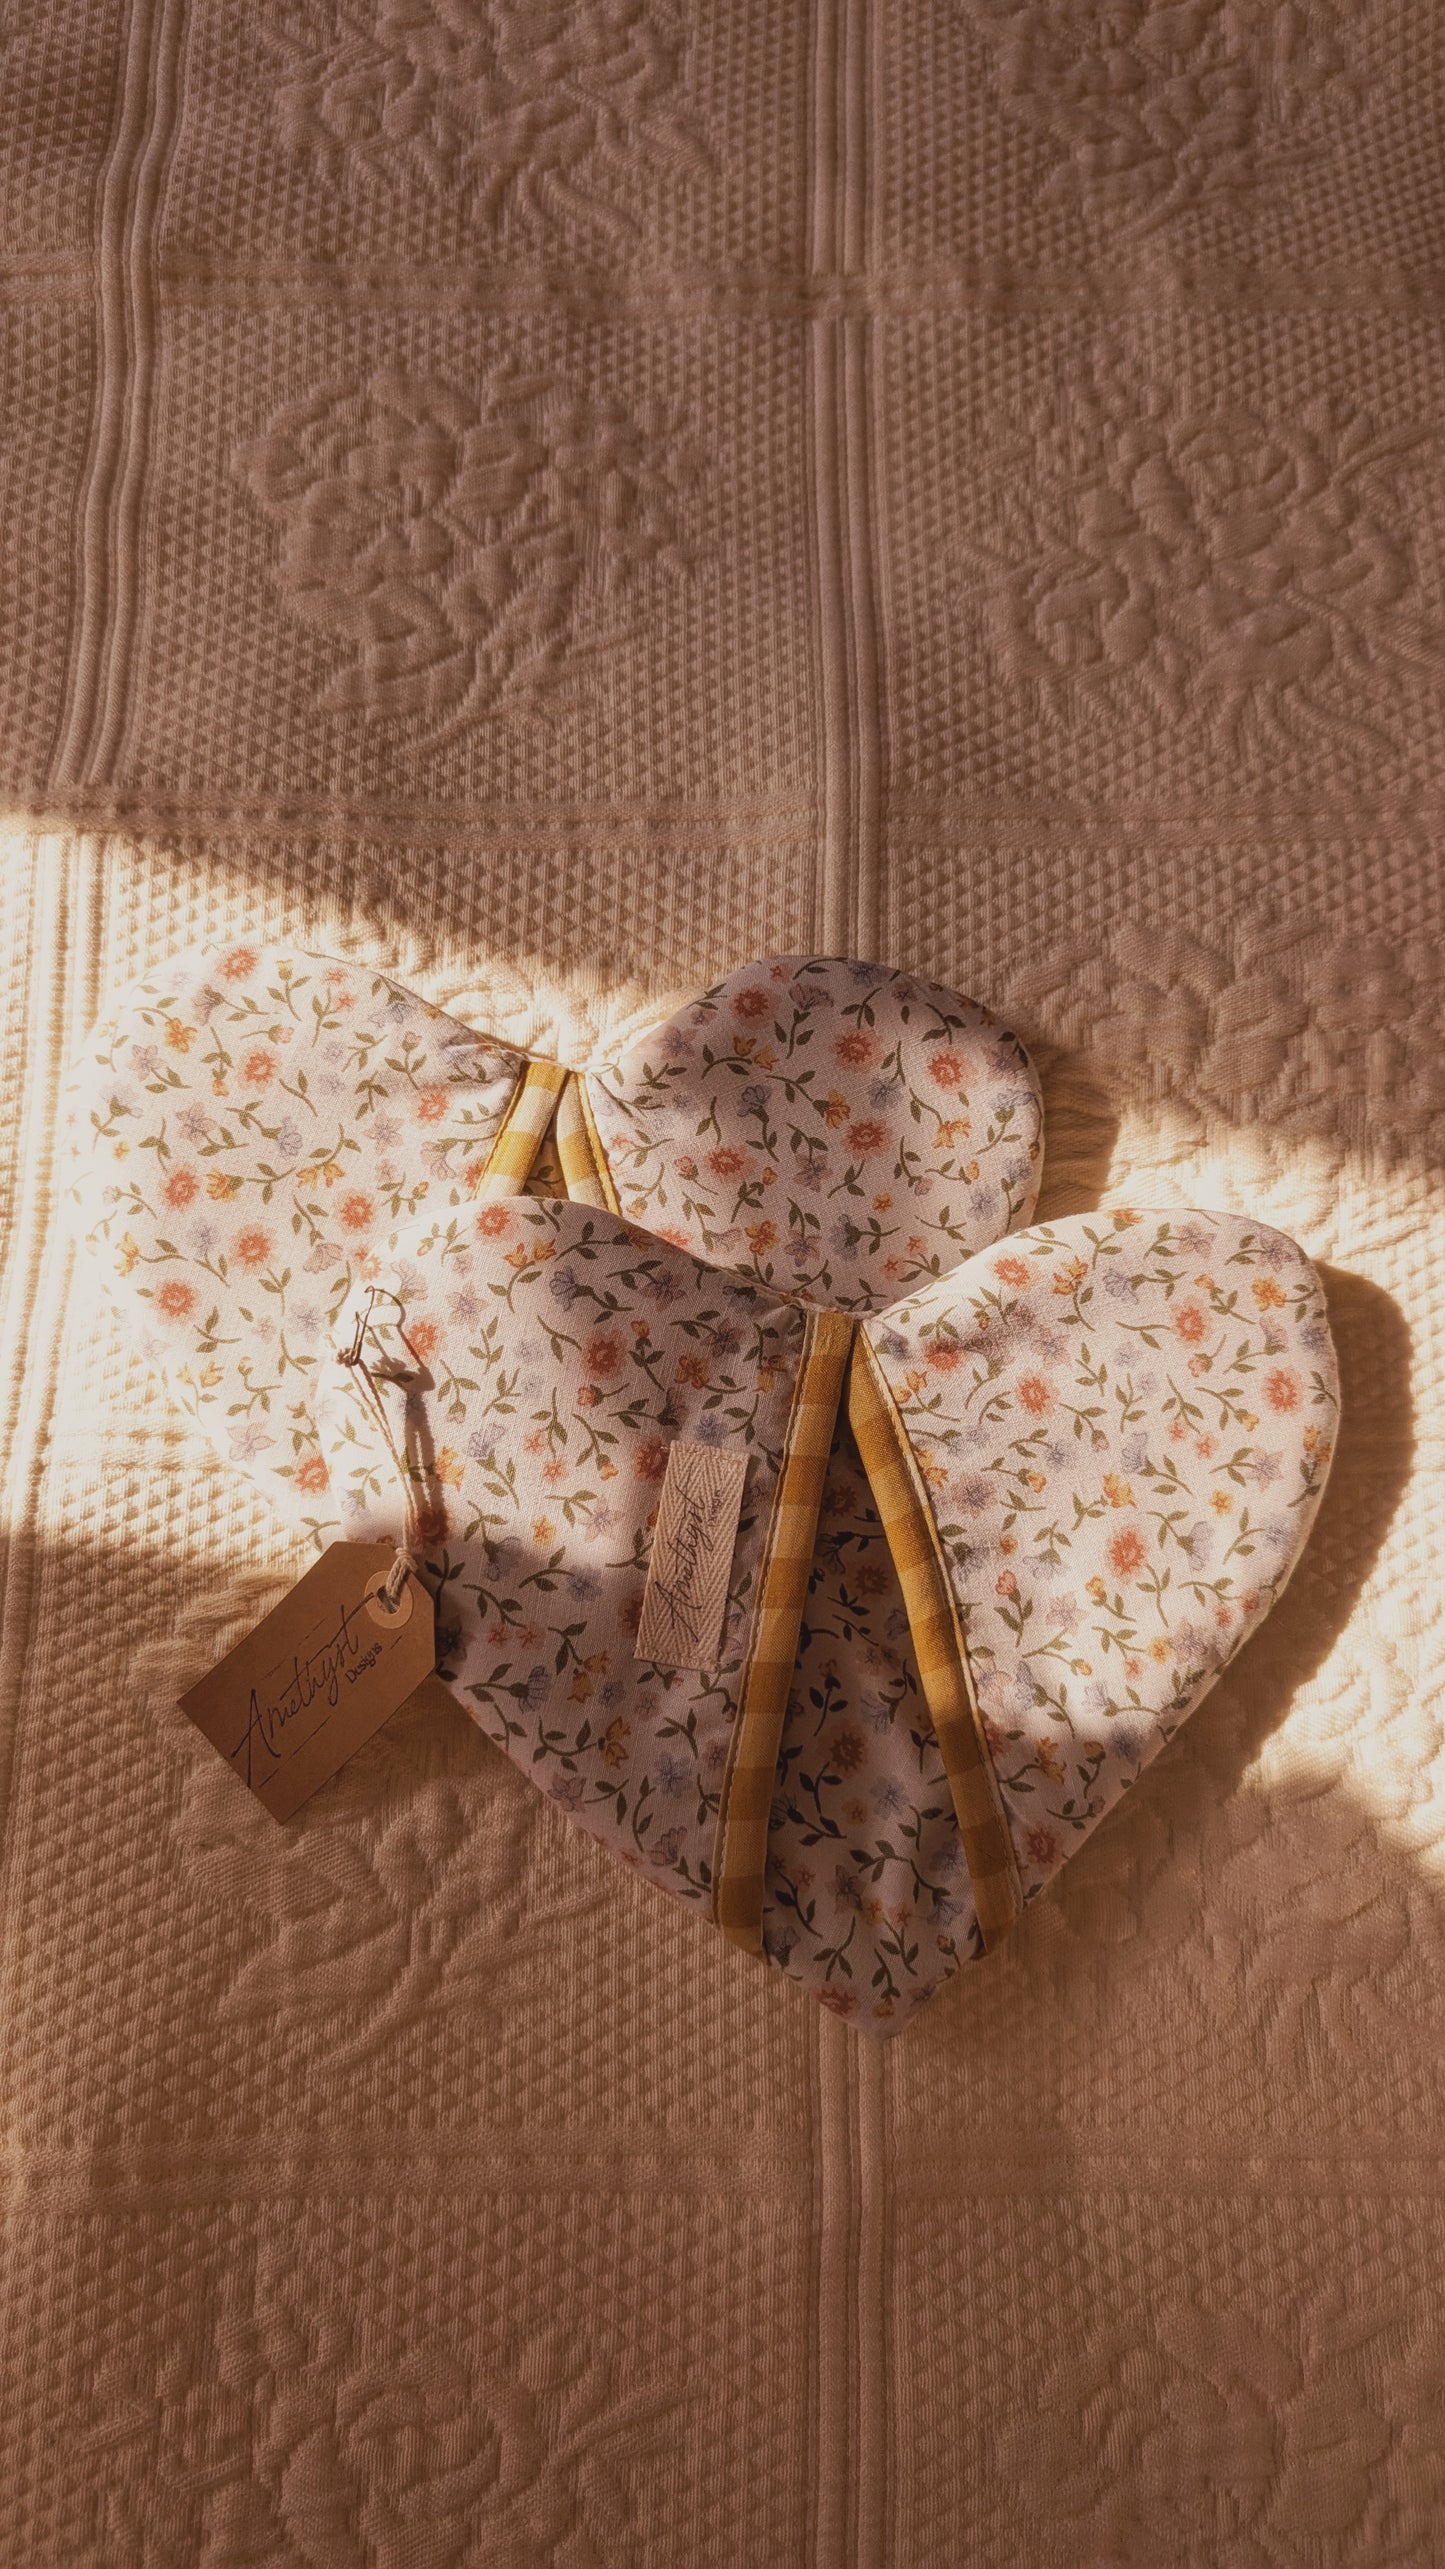 Handmade heart shaped oven mitts - vintage garden